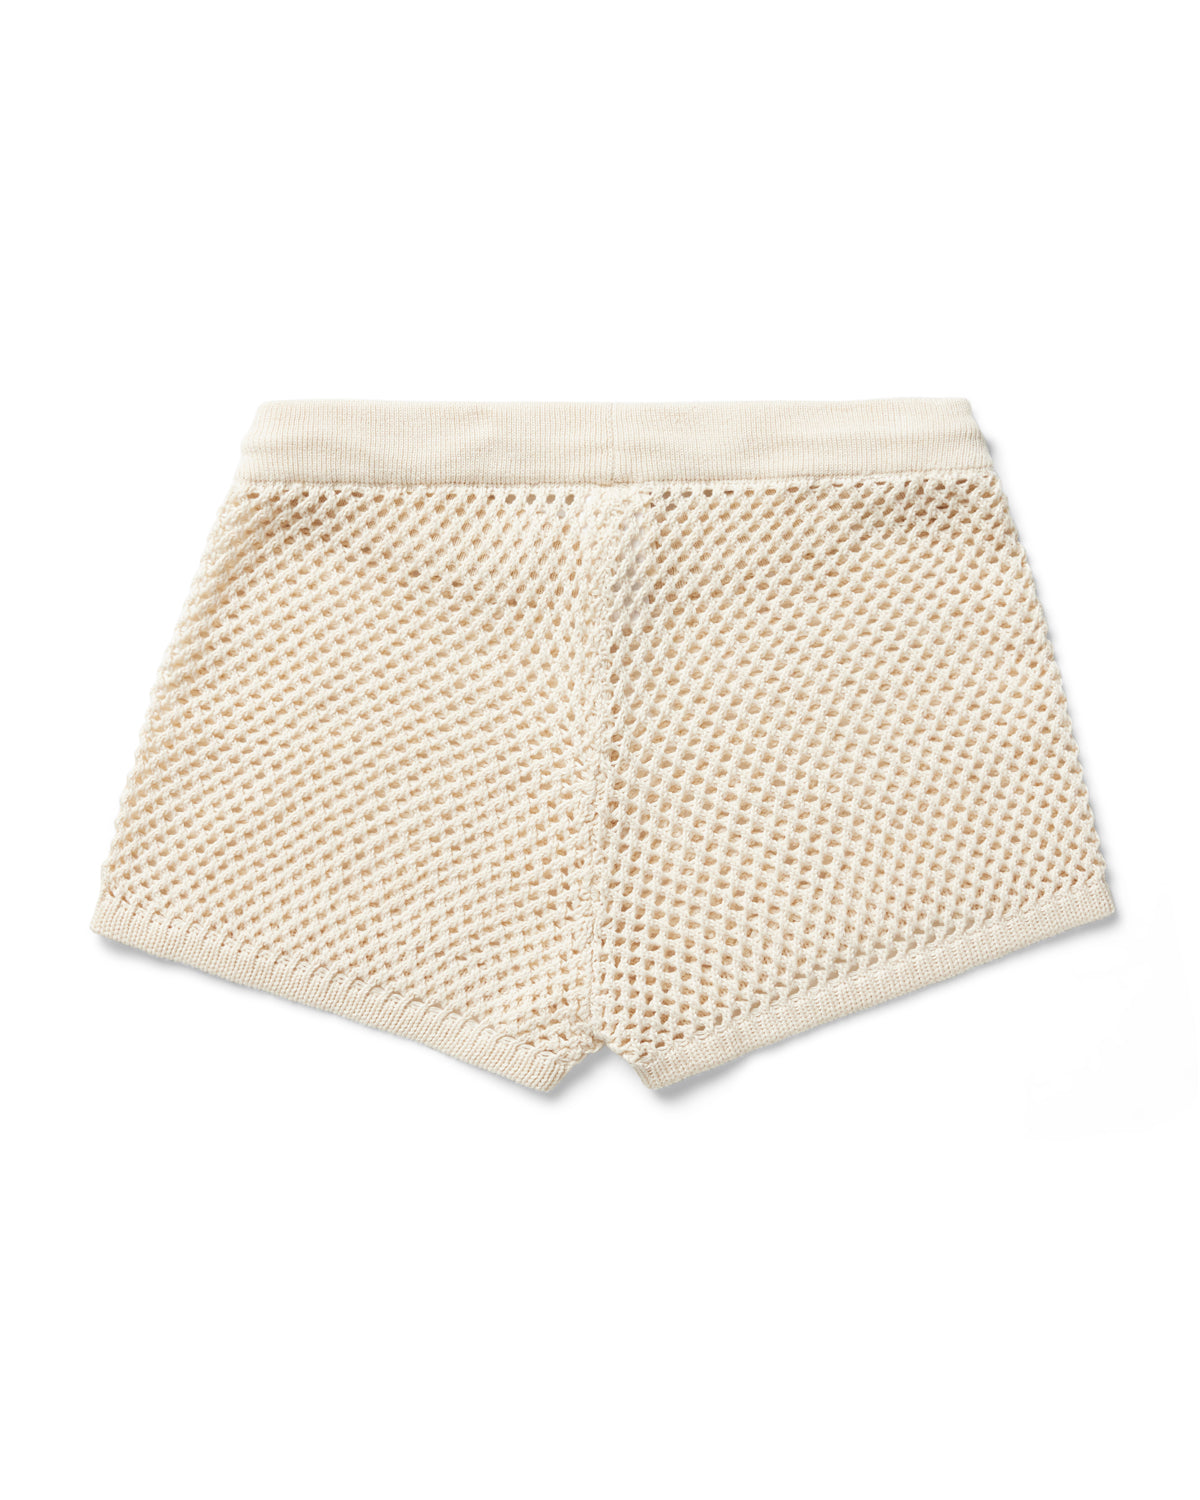 Crochet Shorts White Boxer Briefs  Knit fashion, Crochet fashion